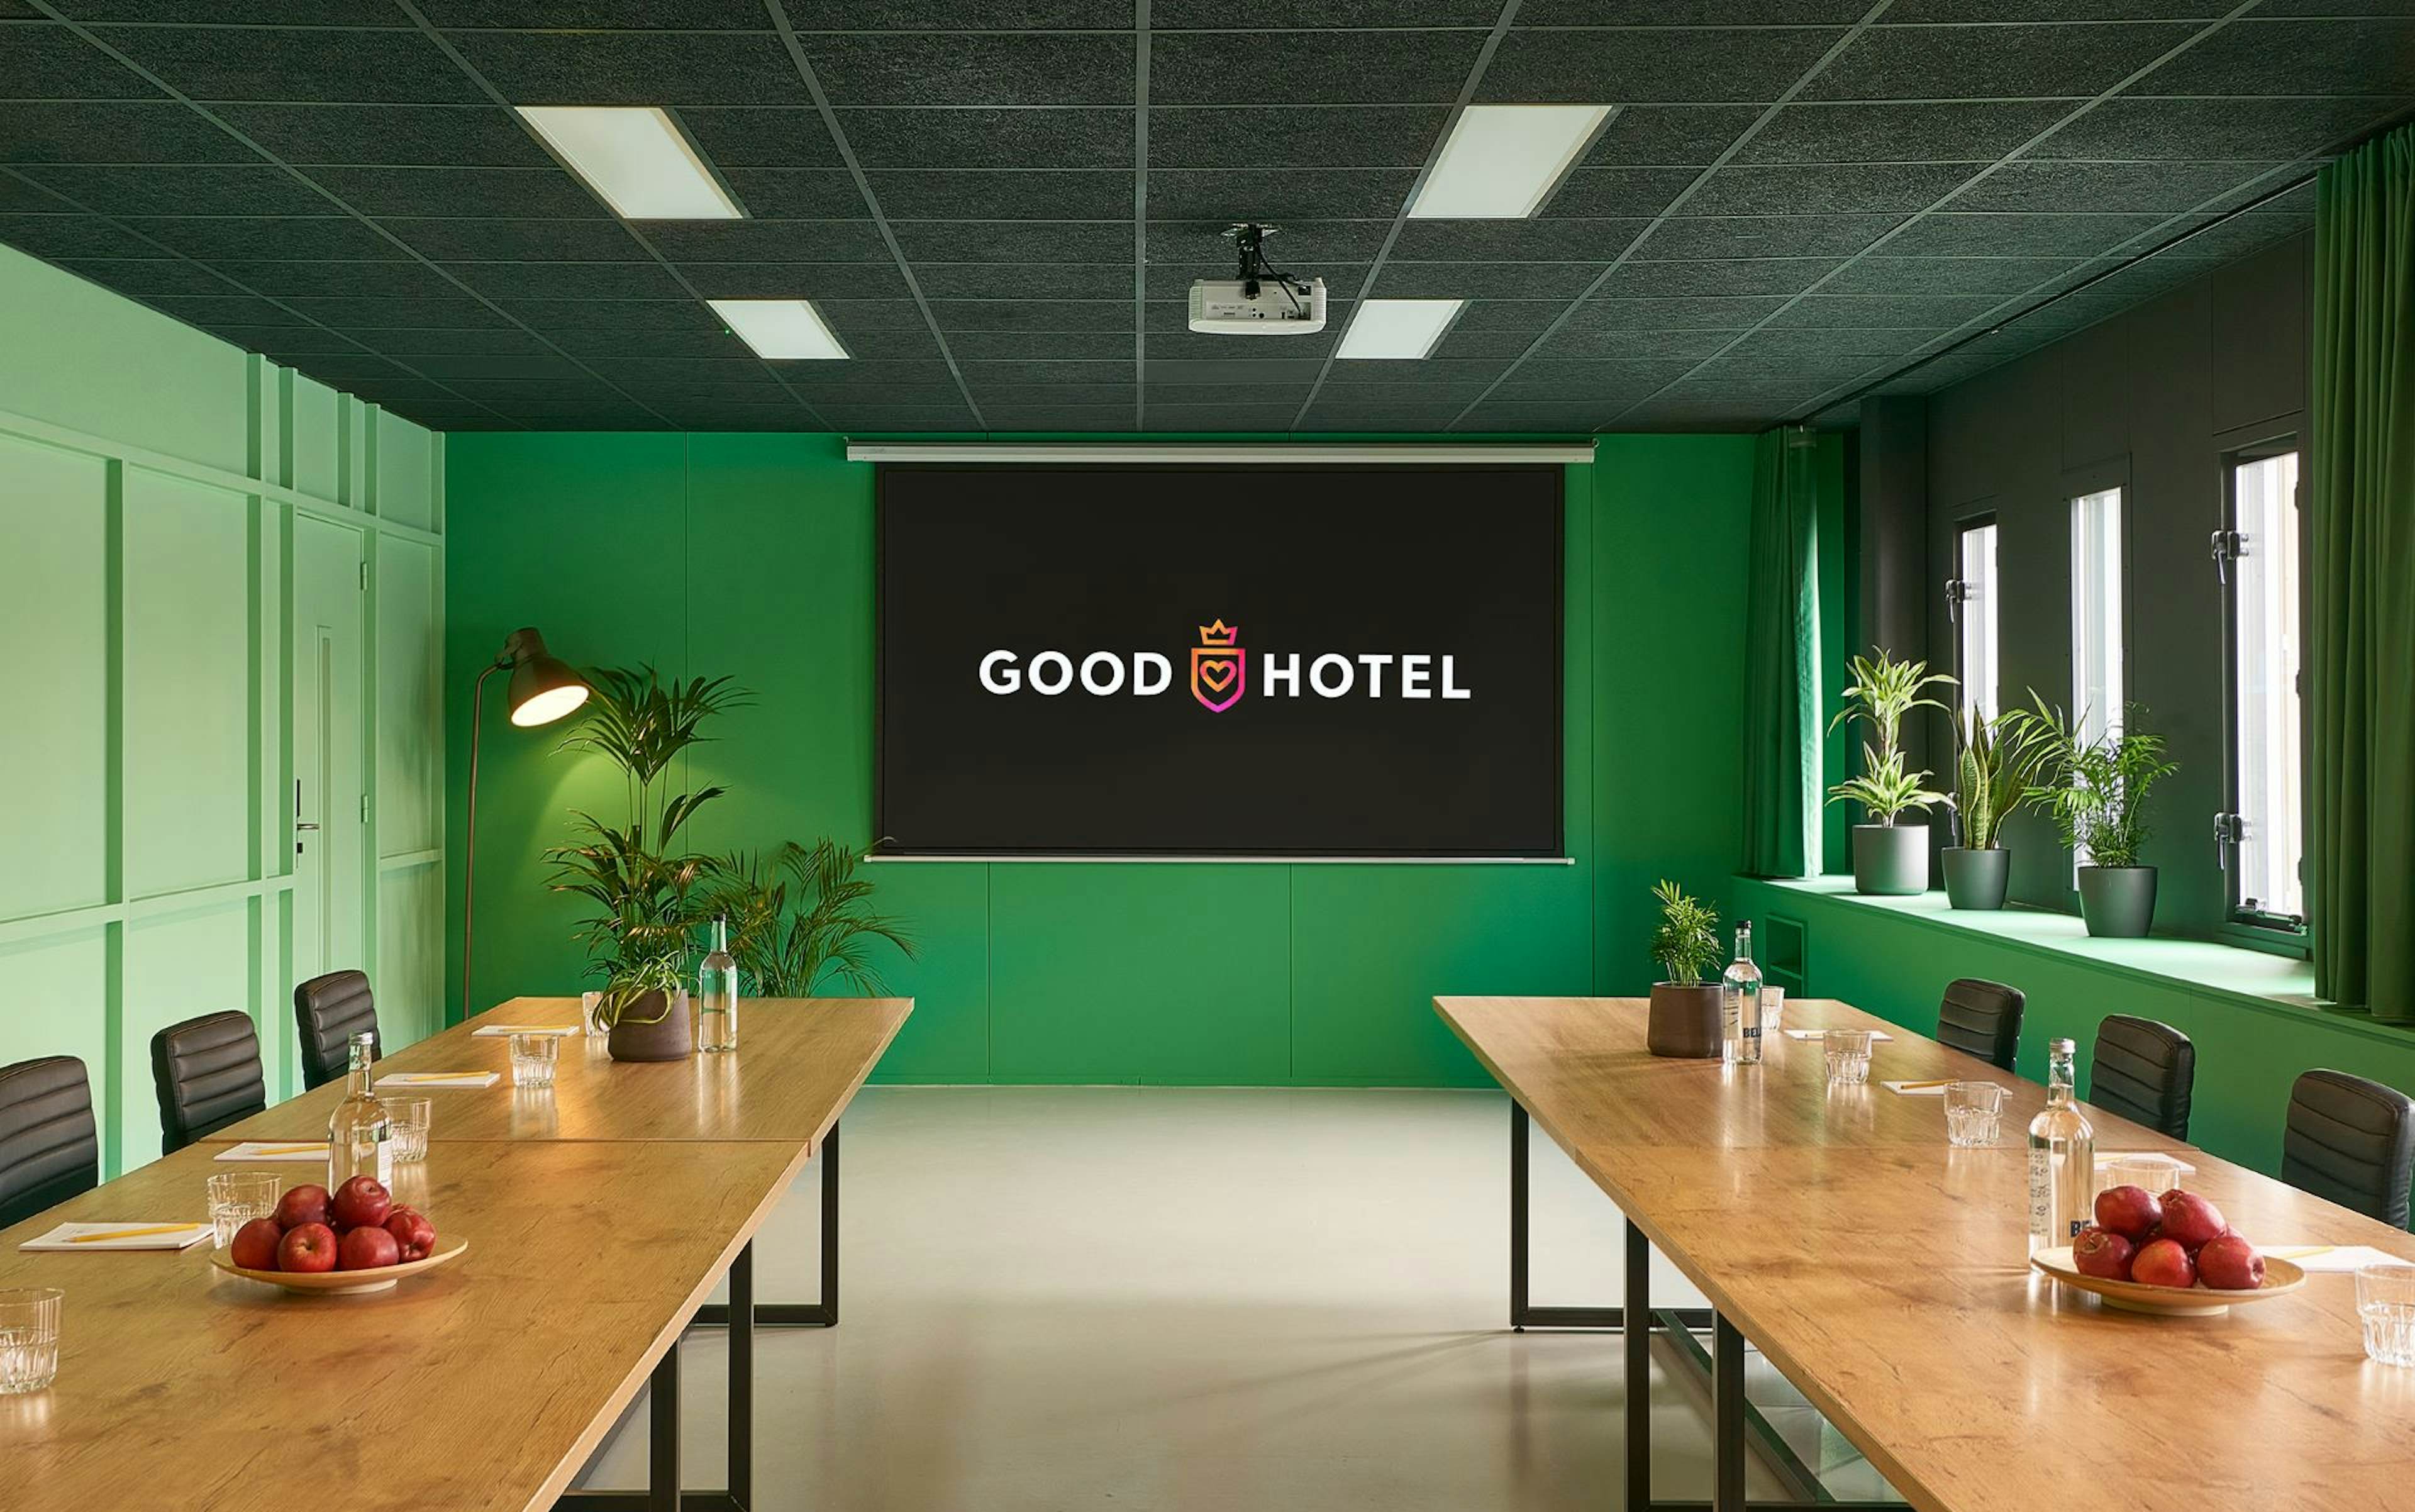 Good Hotel London  - Green meeting room image 1